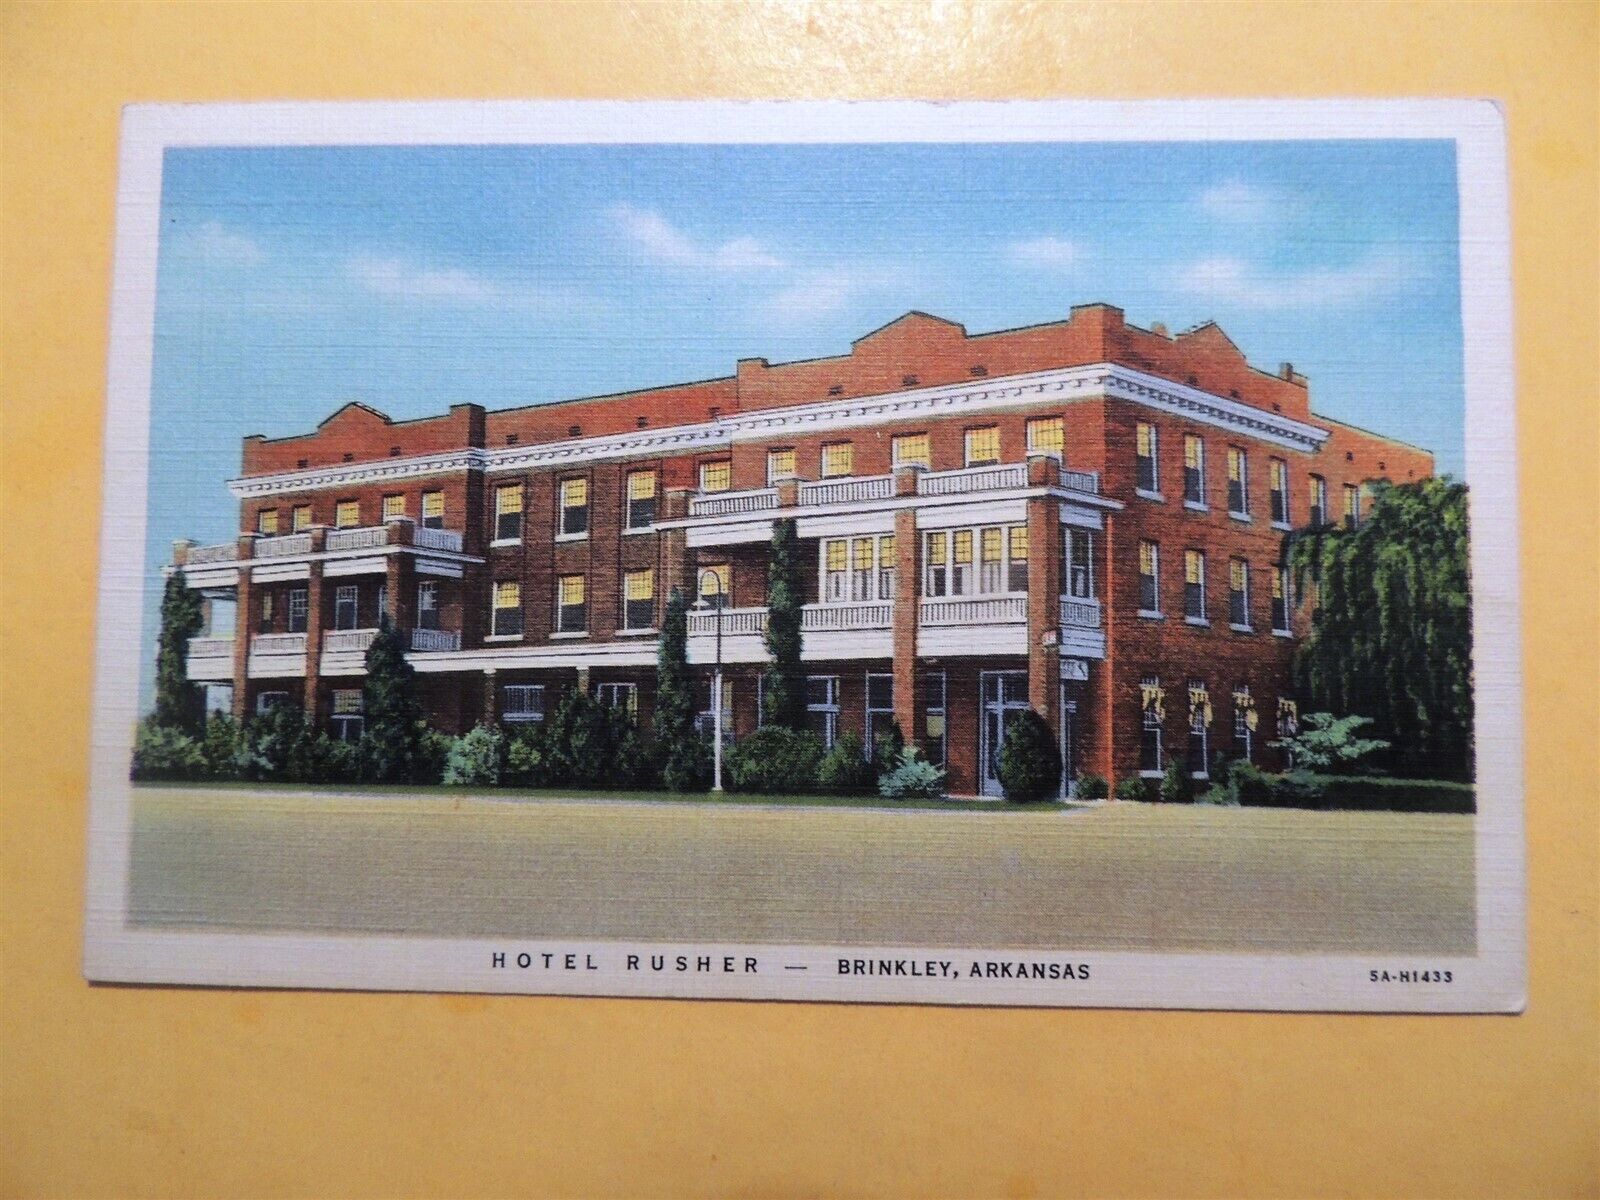 Hotel Rusher Brinkley Arkansas vintage linen postcard 